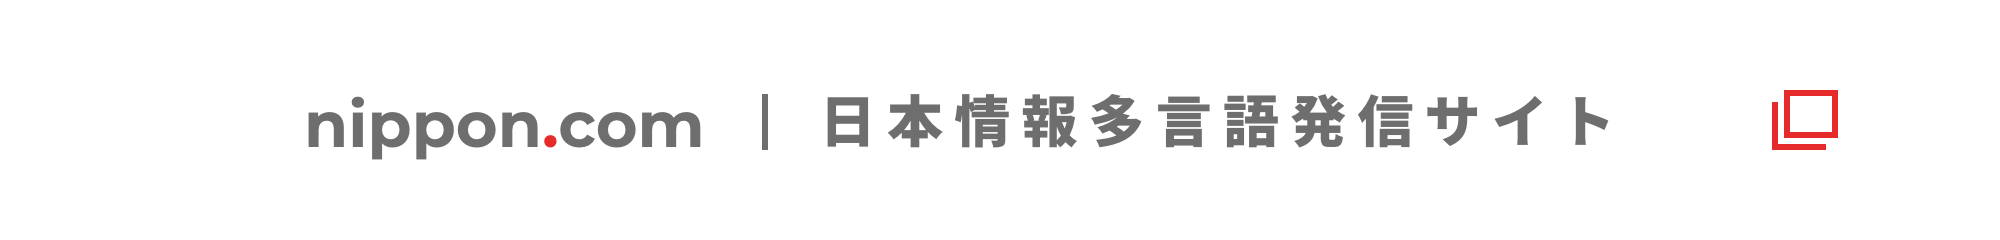 nippon.com | 日本情報多言語発信サイト